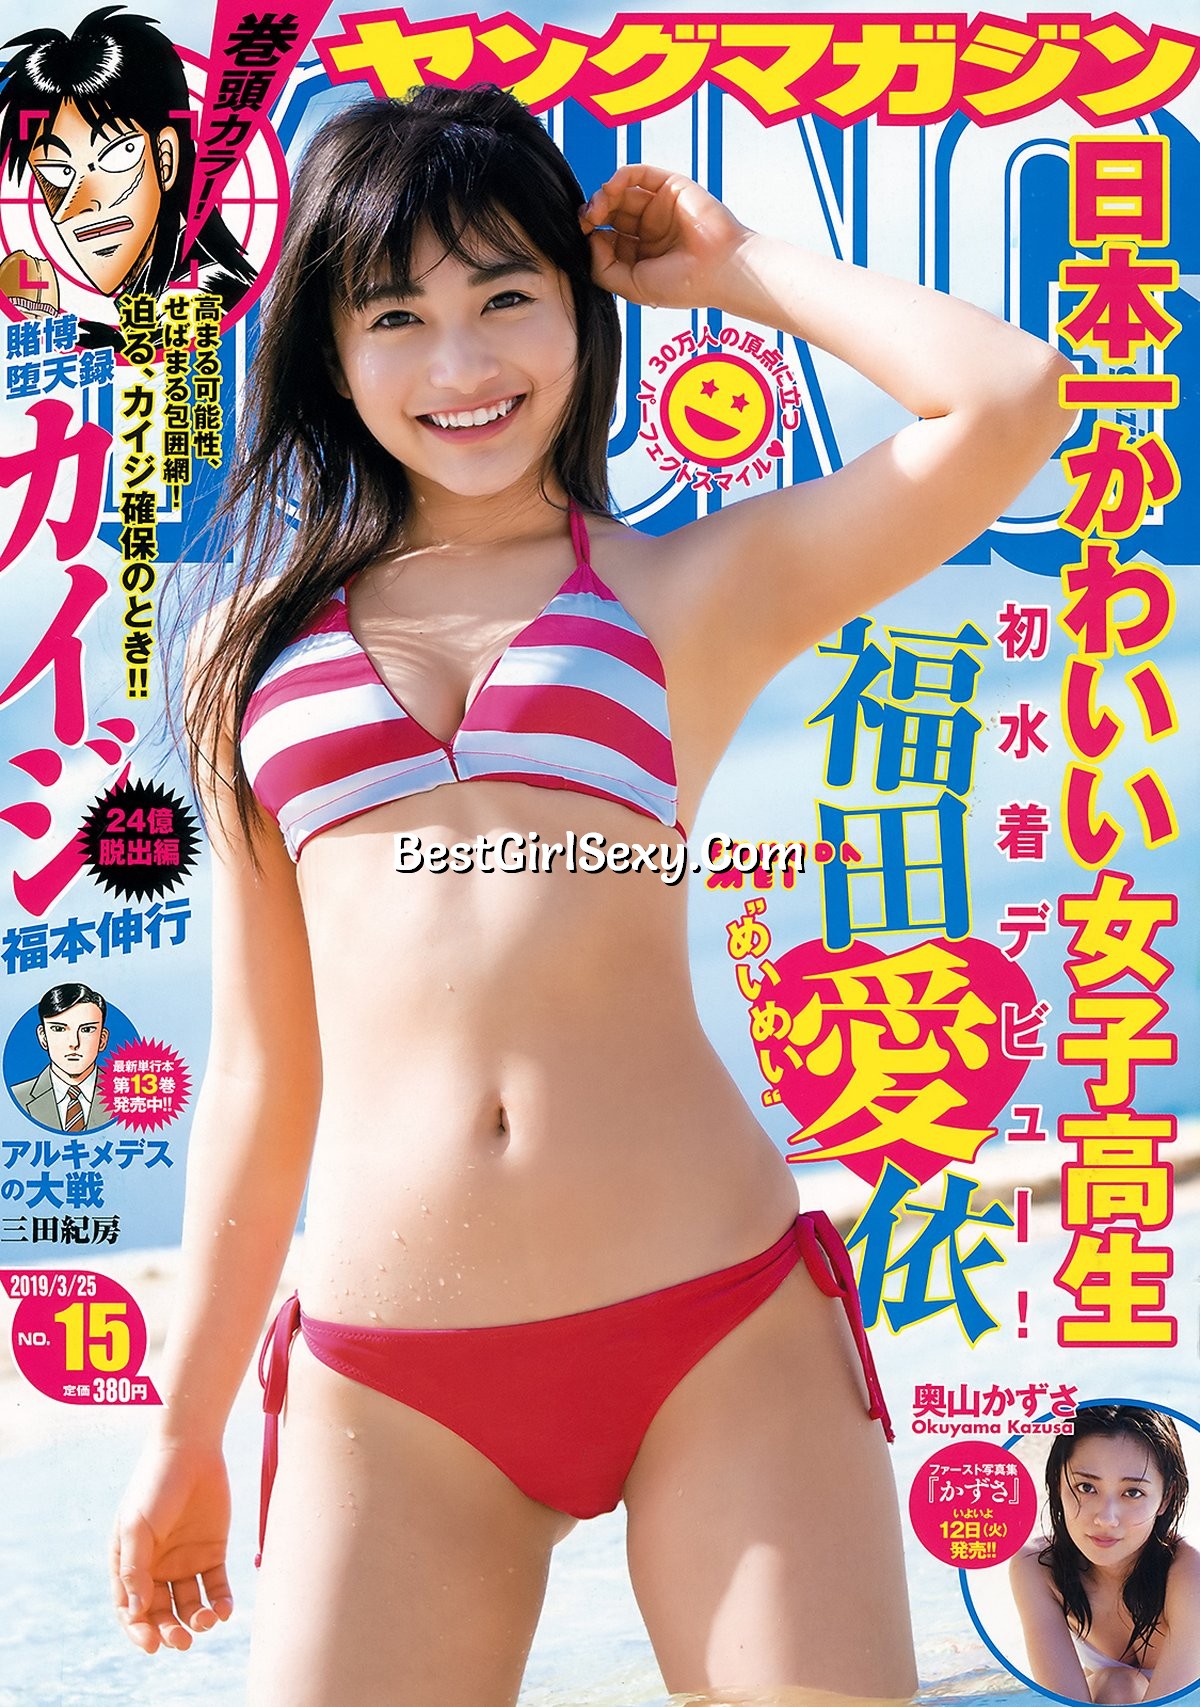 Young Magazine 2019 No 15 Mei Fukuda 福田愛依 x Okuyama Kazusa 奥山かずさ 0001 7720714187.jpg